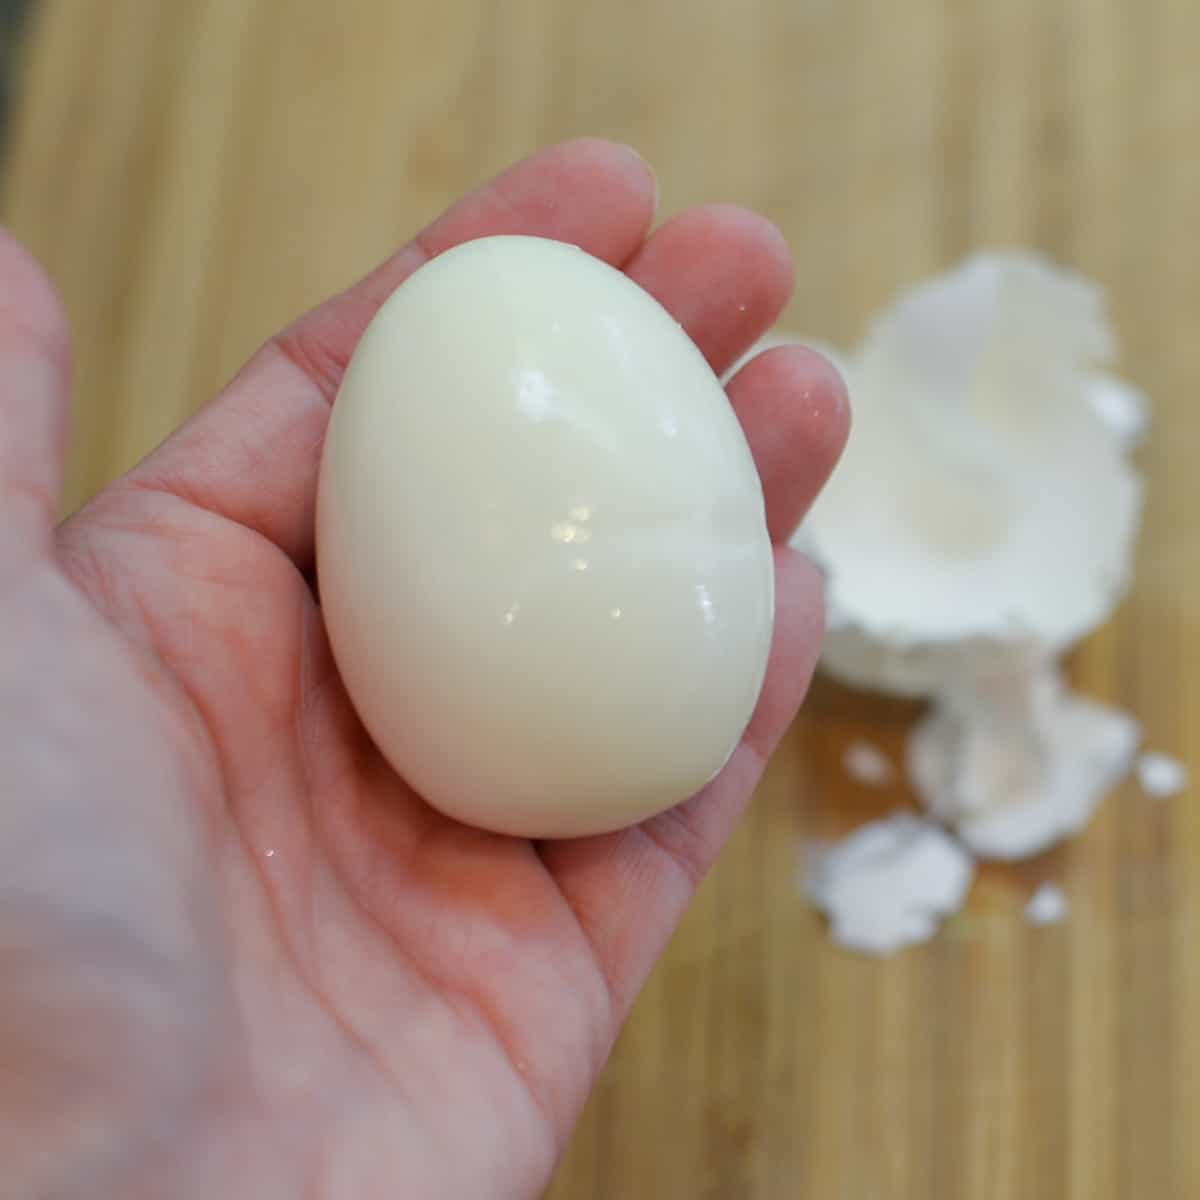 A hand holds a freshly peeled hard boiled egg.